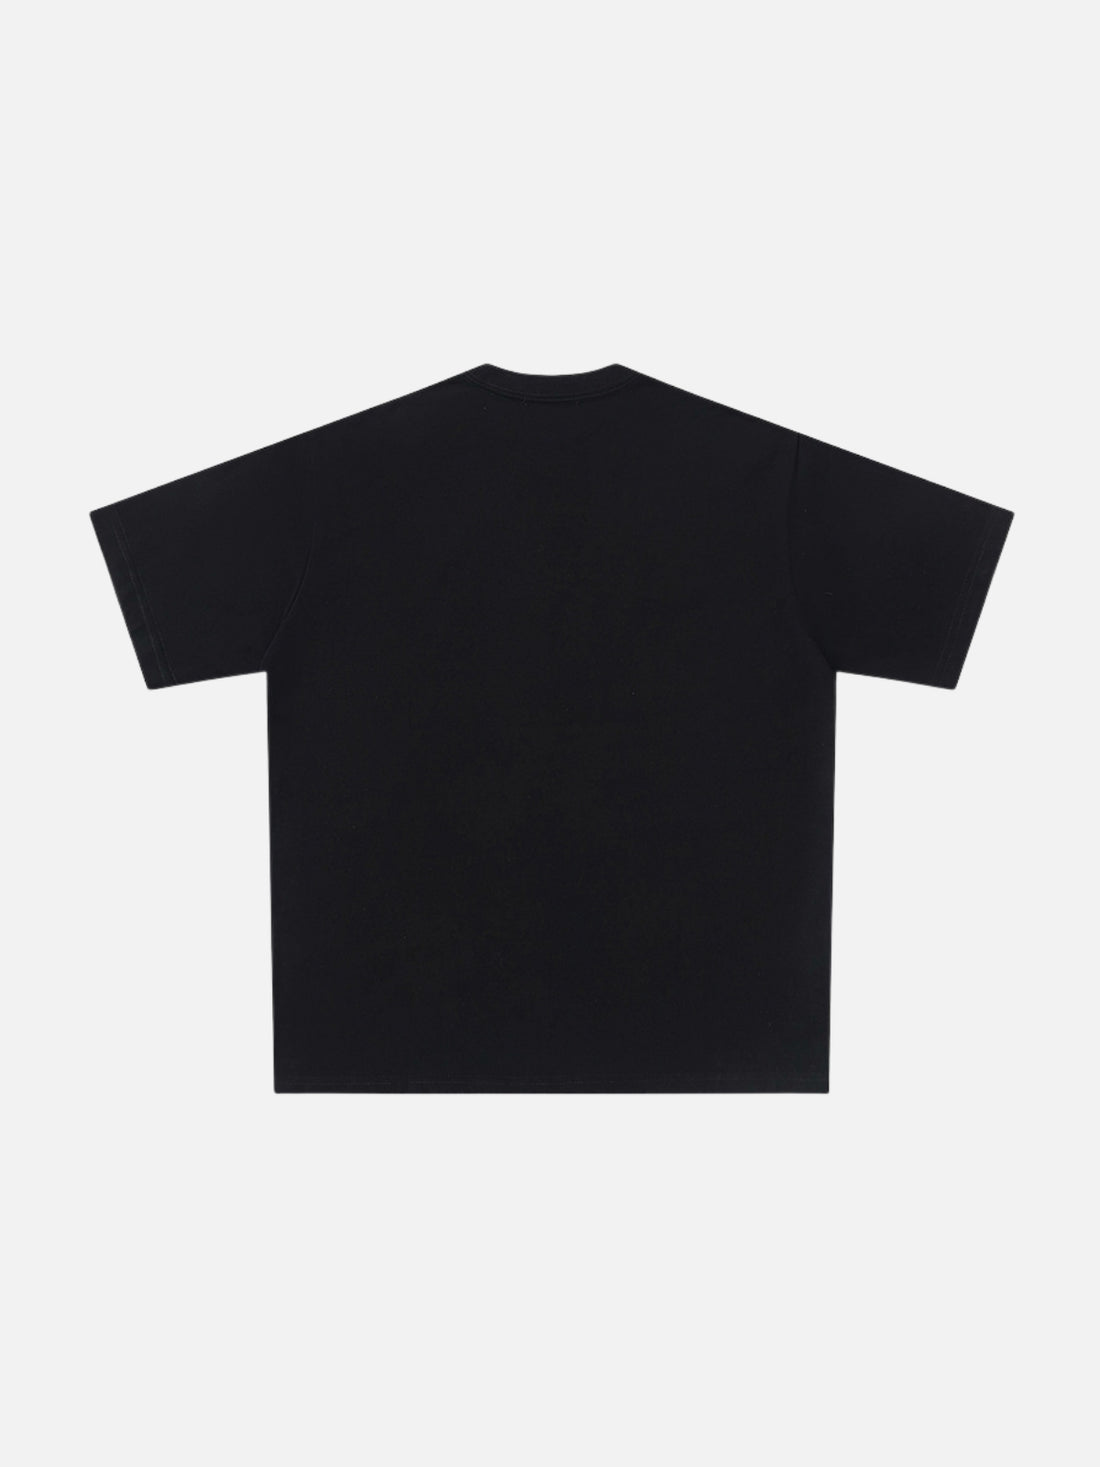 ROCKSTAR - Oversized Print T-Shirt Black | Teenwear.eu